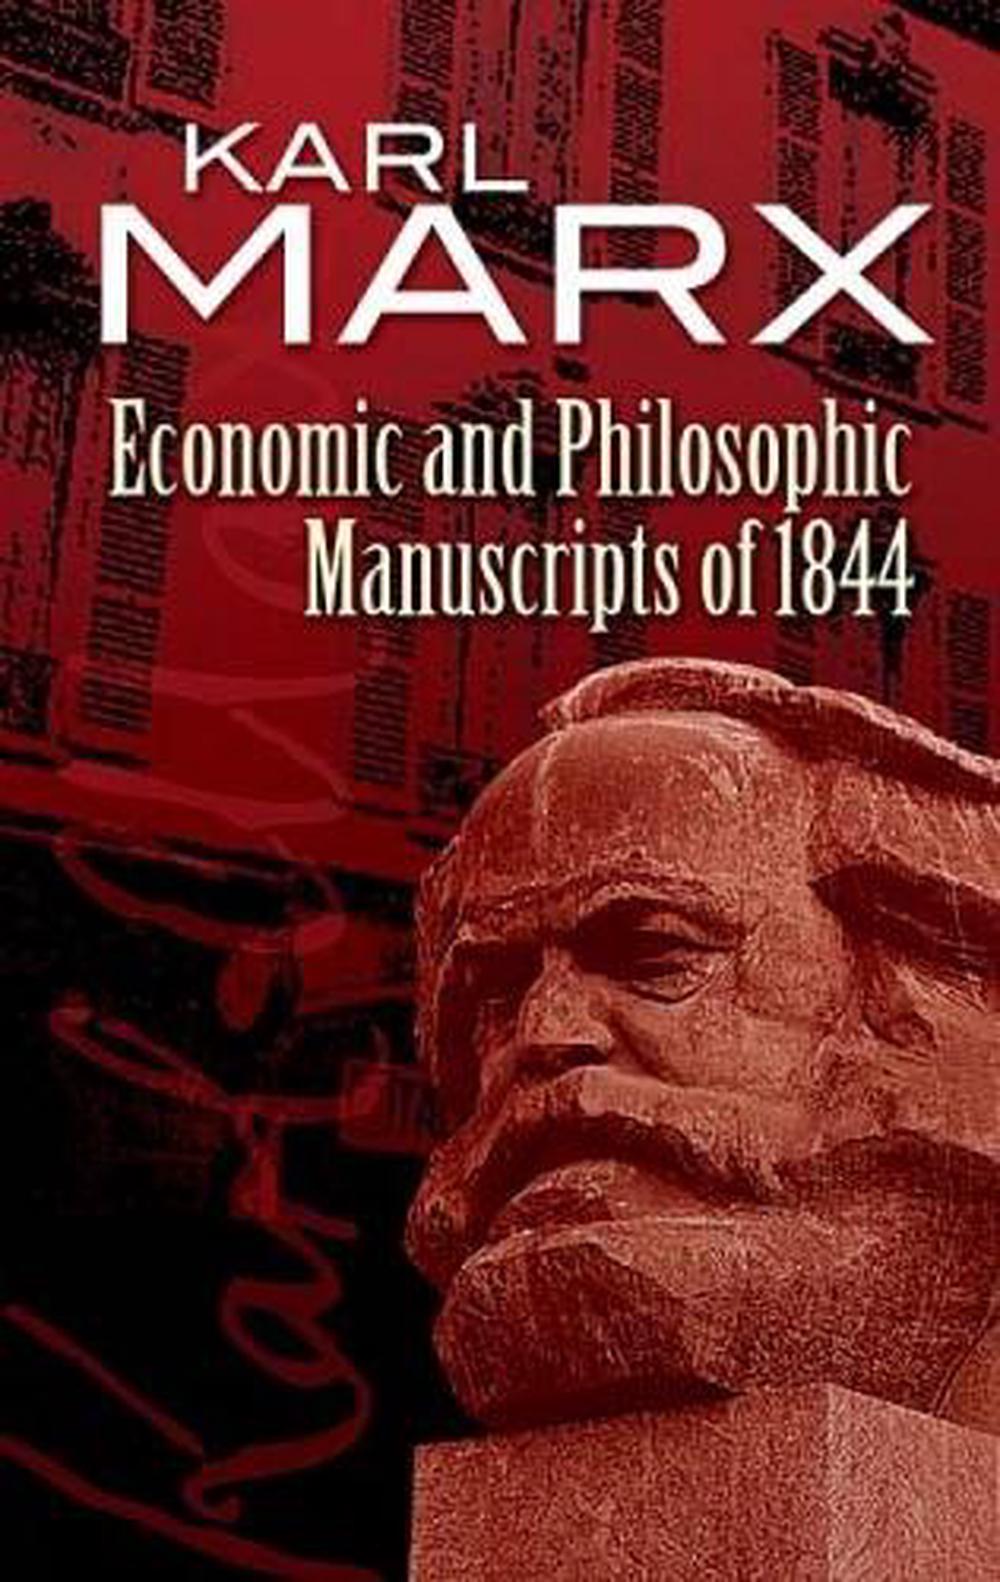 full text economic and philosophic manuscripts of 1844